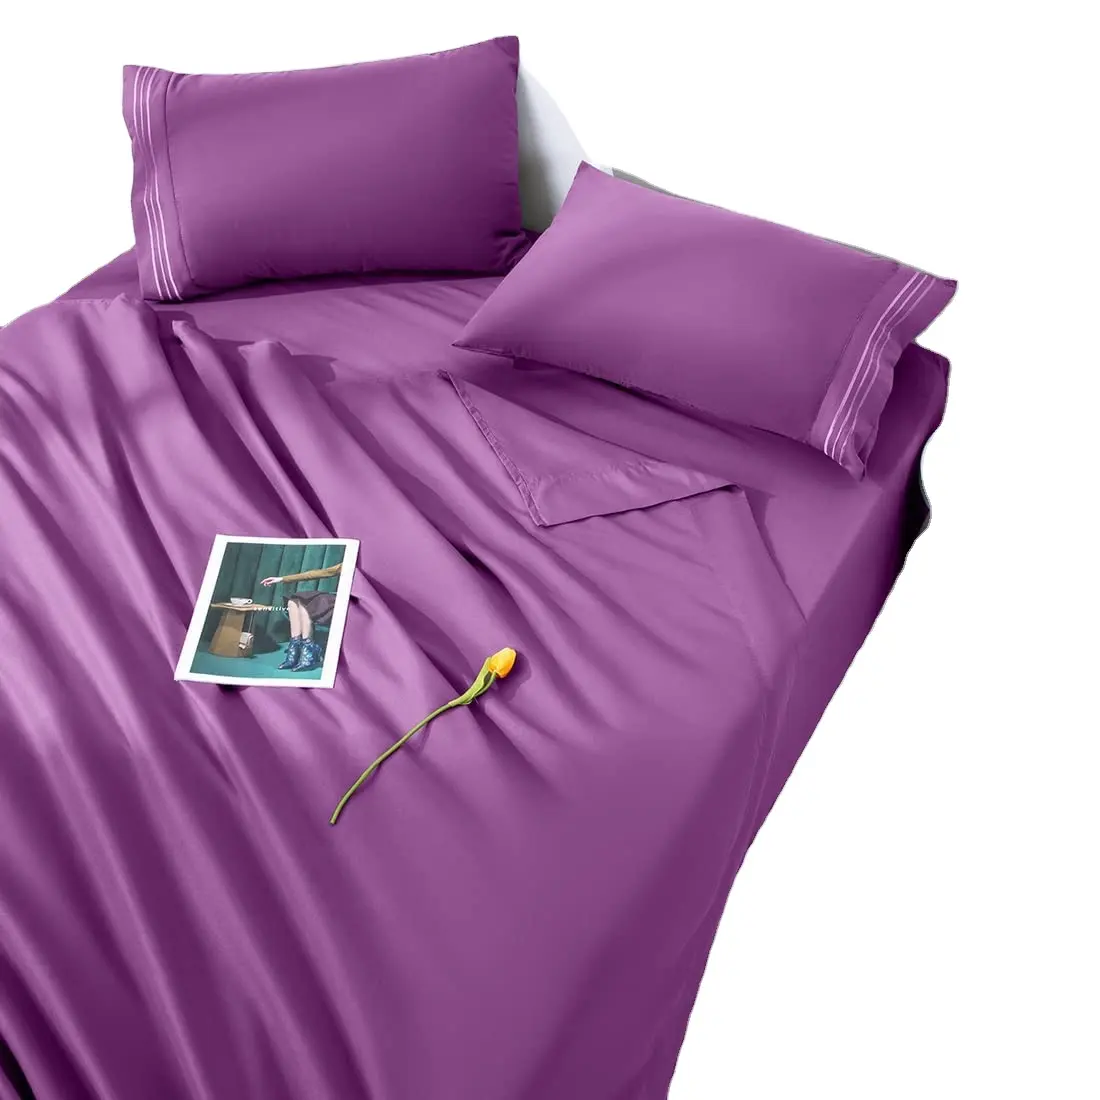 Twin Full Queen King Size Bedding Set Home Bed Sheet Set Super Soft Microfiber Bed Sheet Set